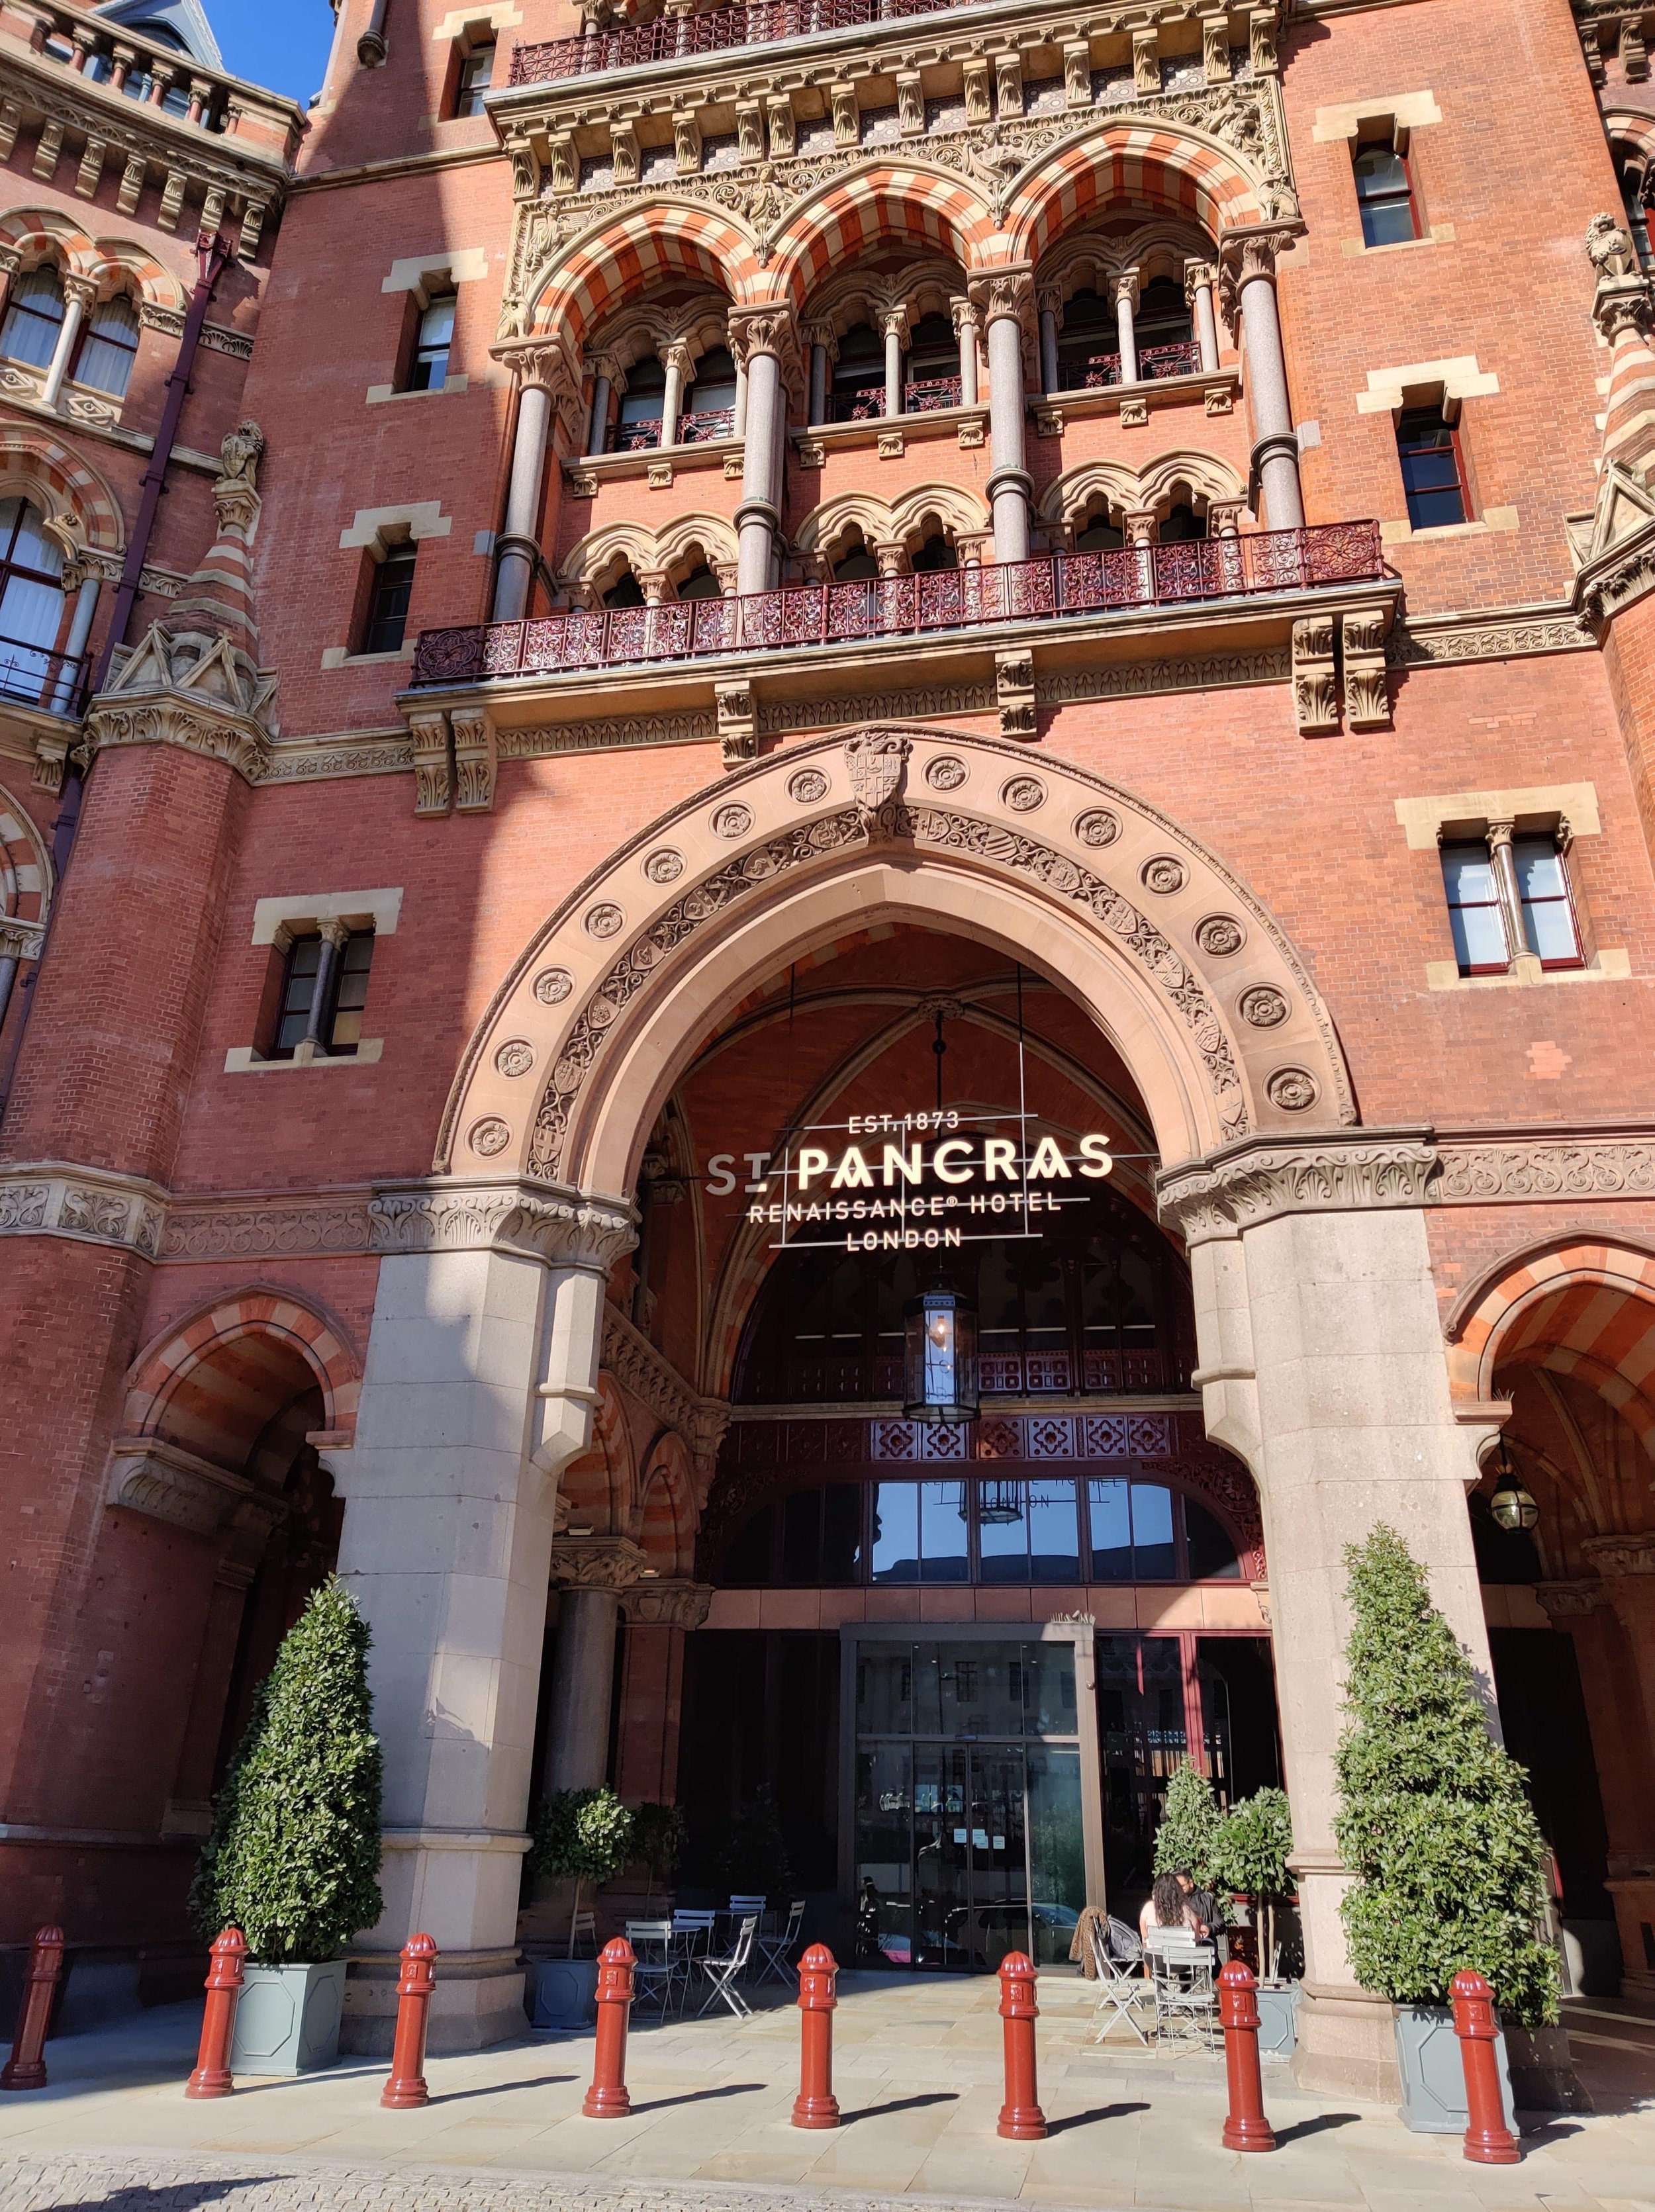 St Pancras Renaissance Hotel London 